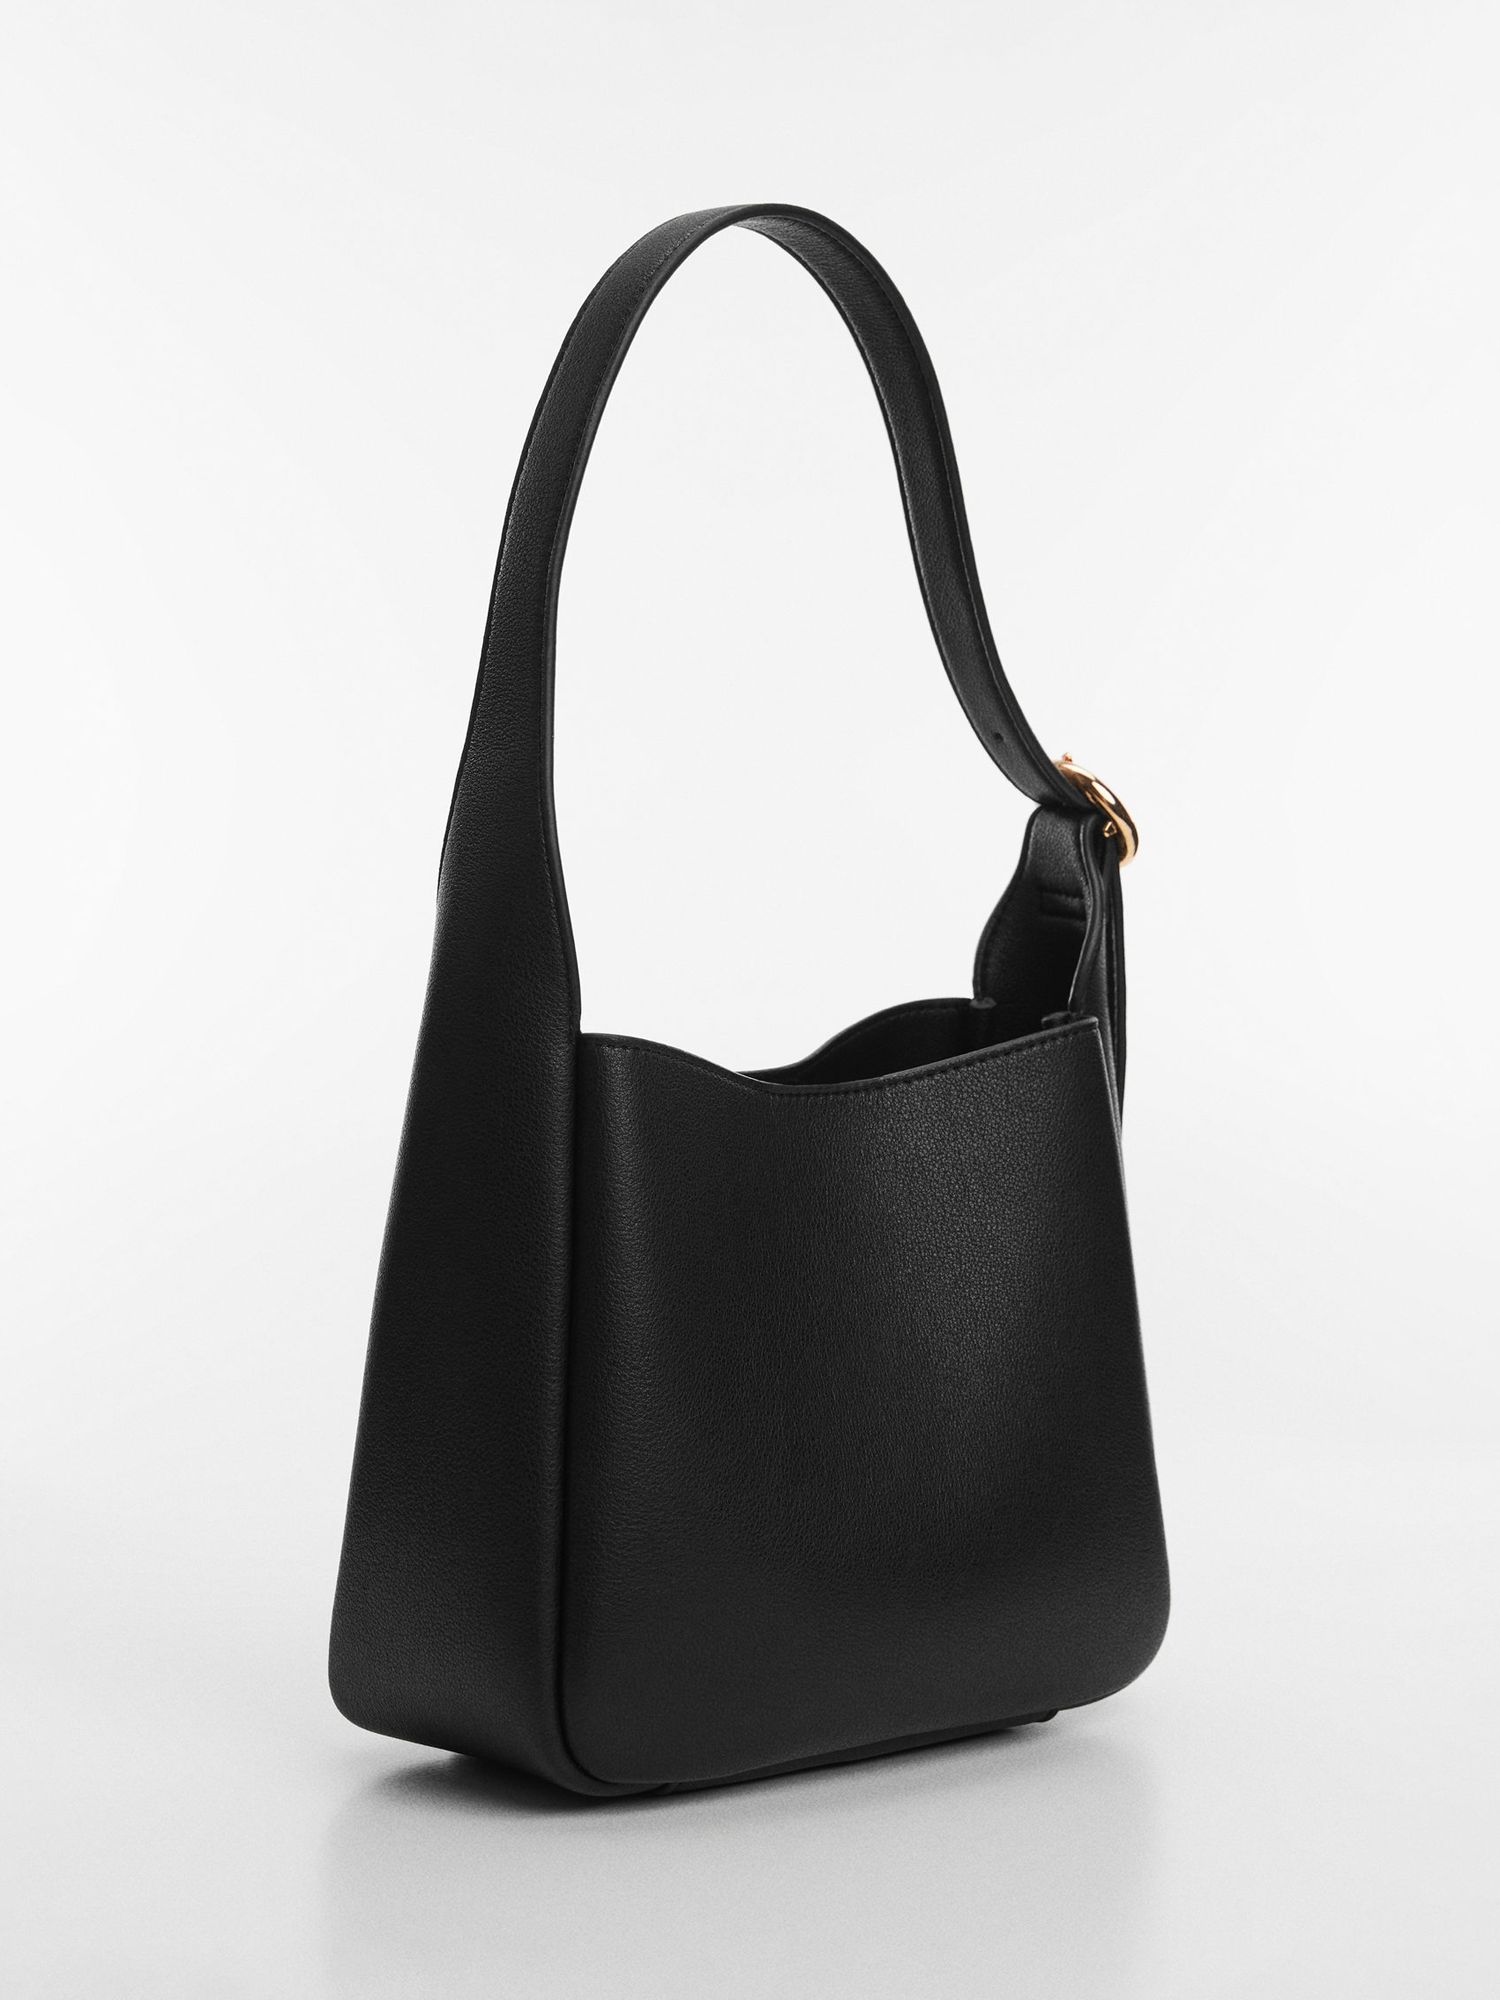 Mango Salva Faux Leather Shoulder Bag, Black, One Size